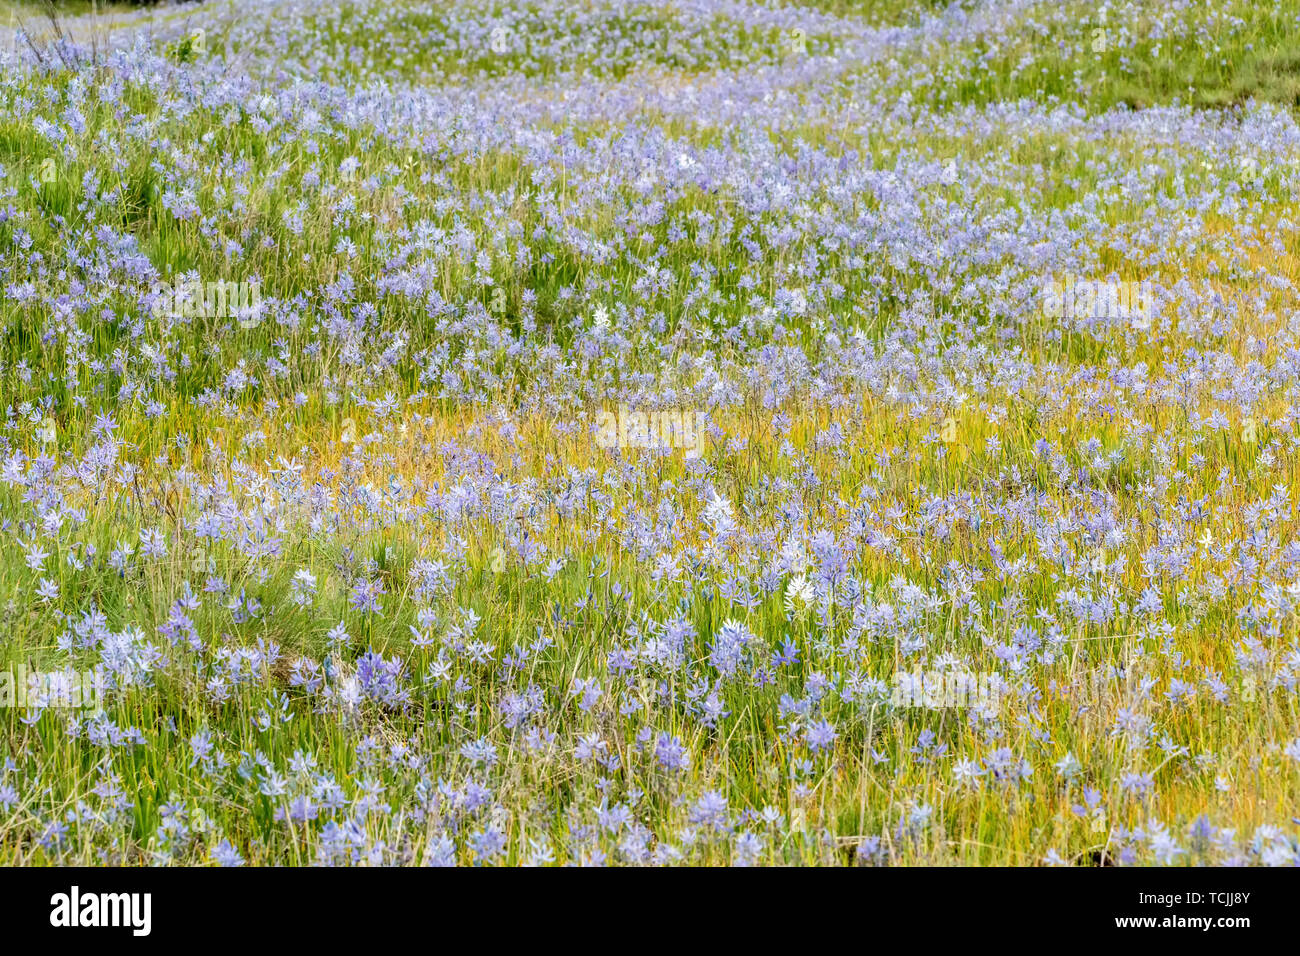 Mima Mounds Natural Area Preserve near Olympia, Washington, USA.  Field of Common Camas wildflowers. Stock Photo